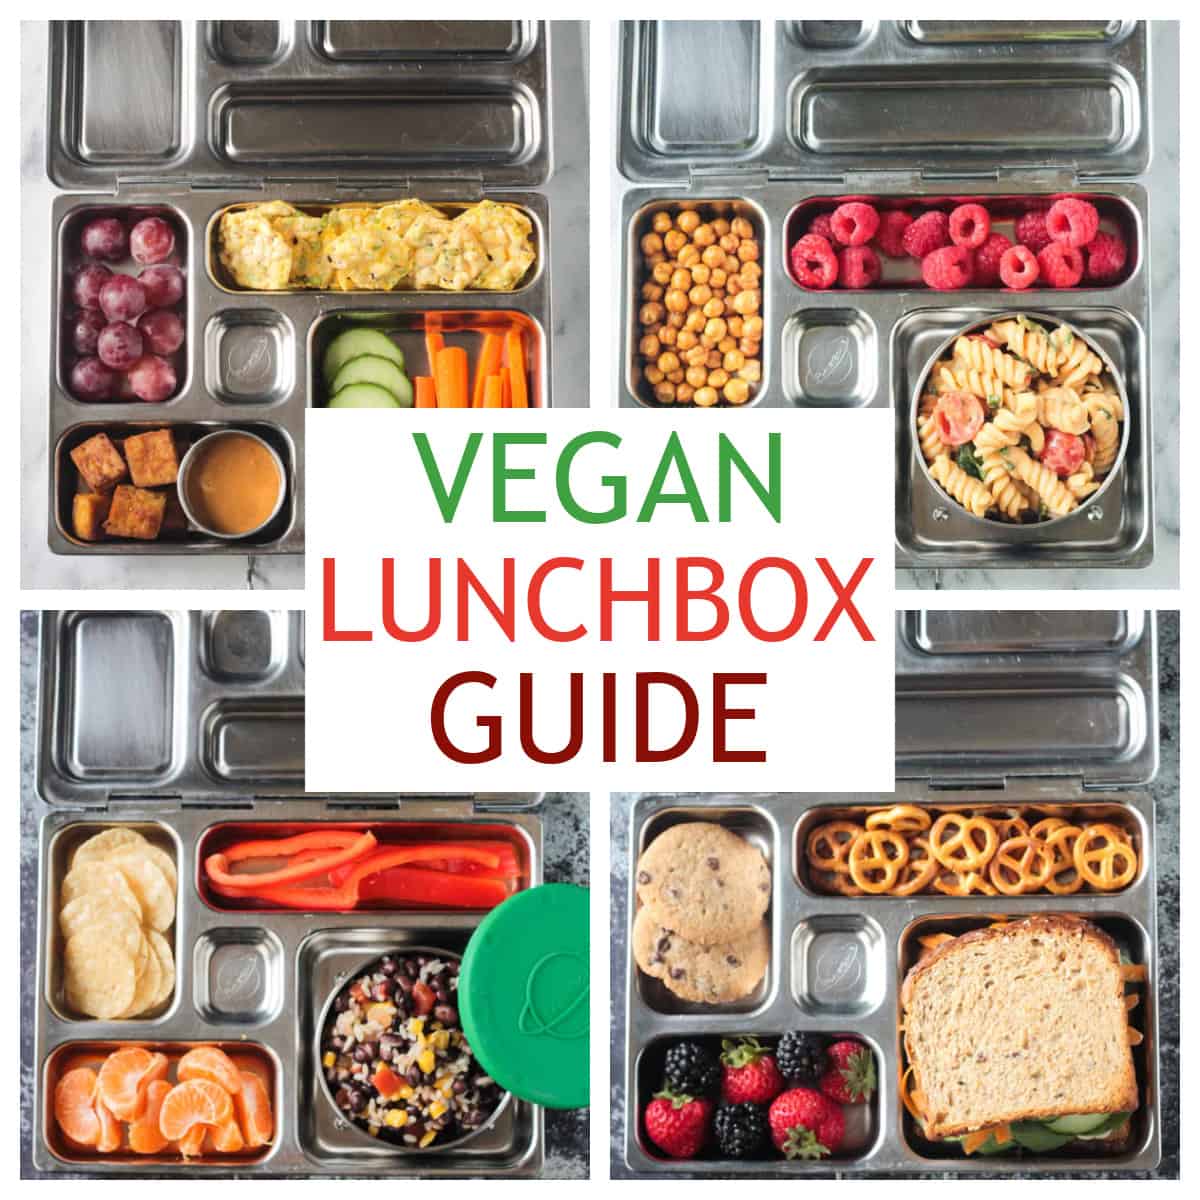 https://www.veggieinspired.com/wp-content/uploads/2020/09/vegan-lunchbox-featured.jpg